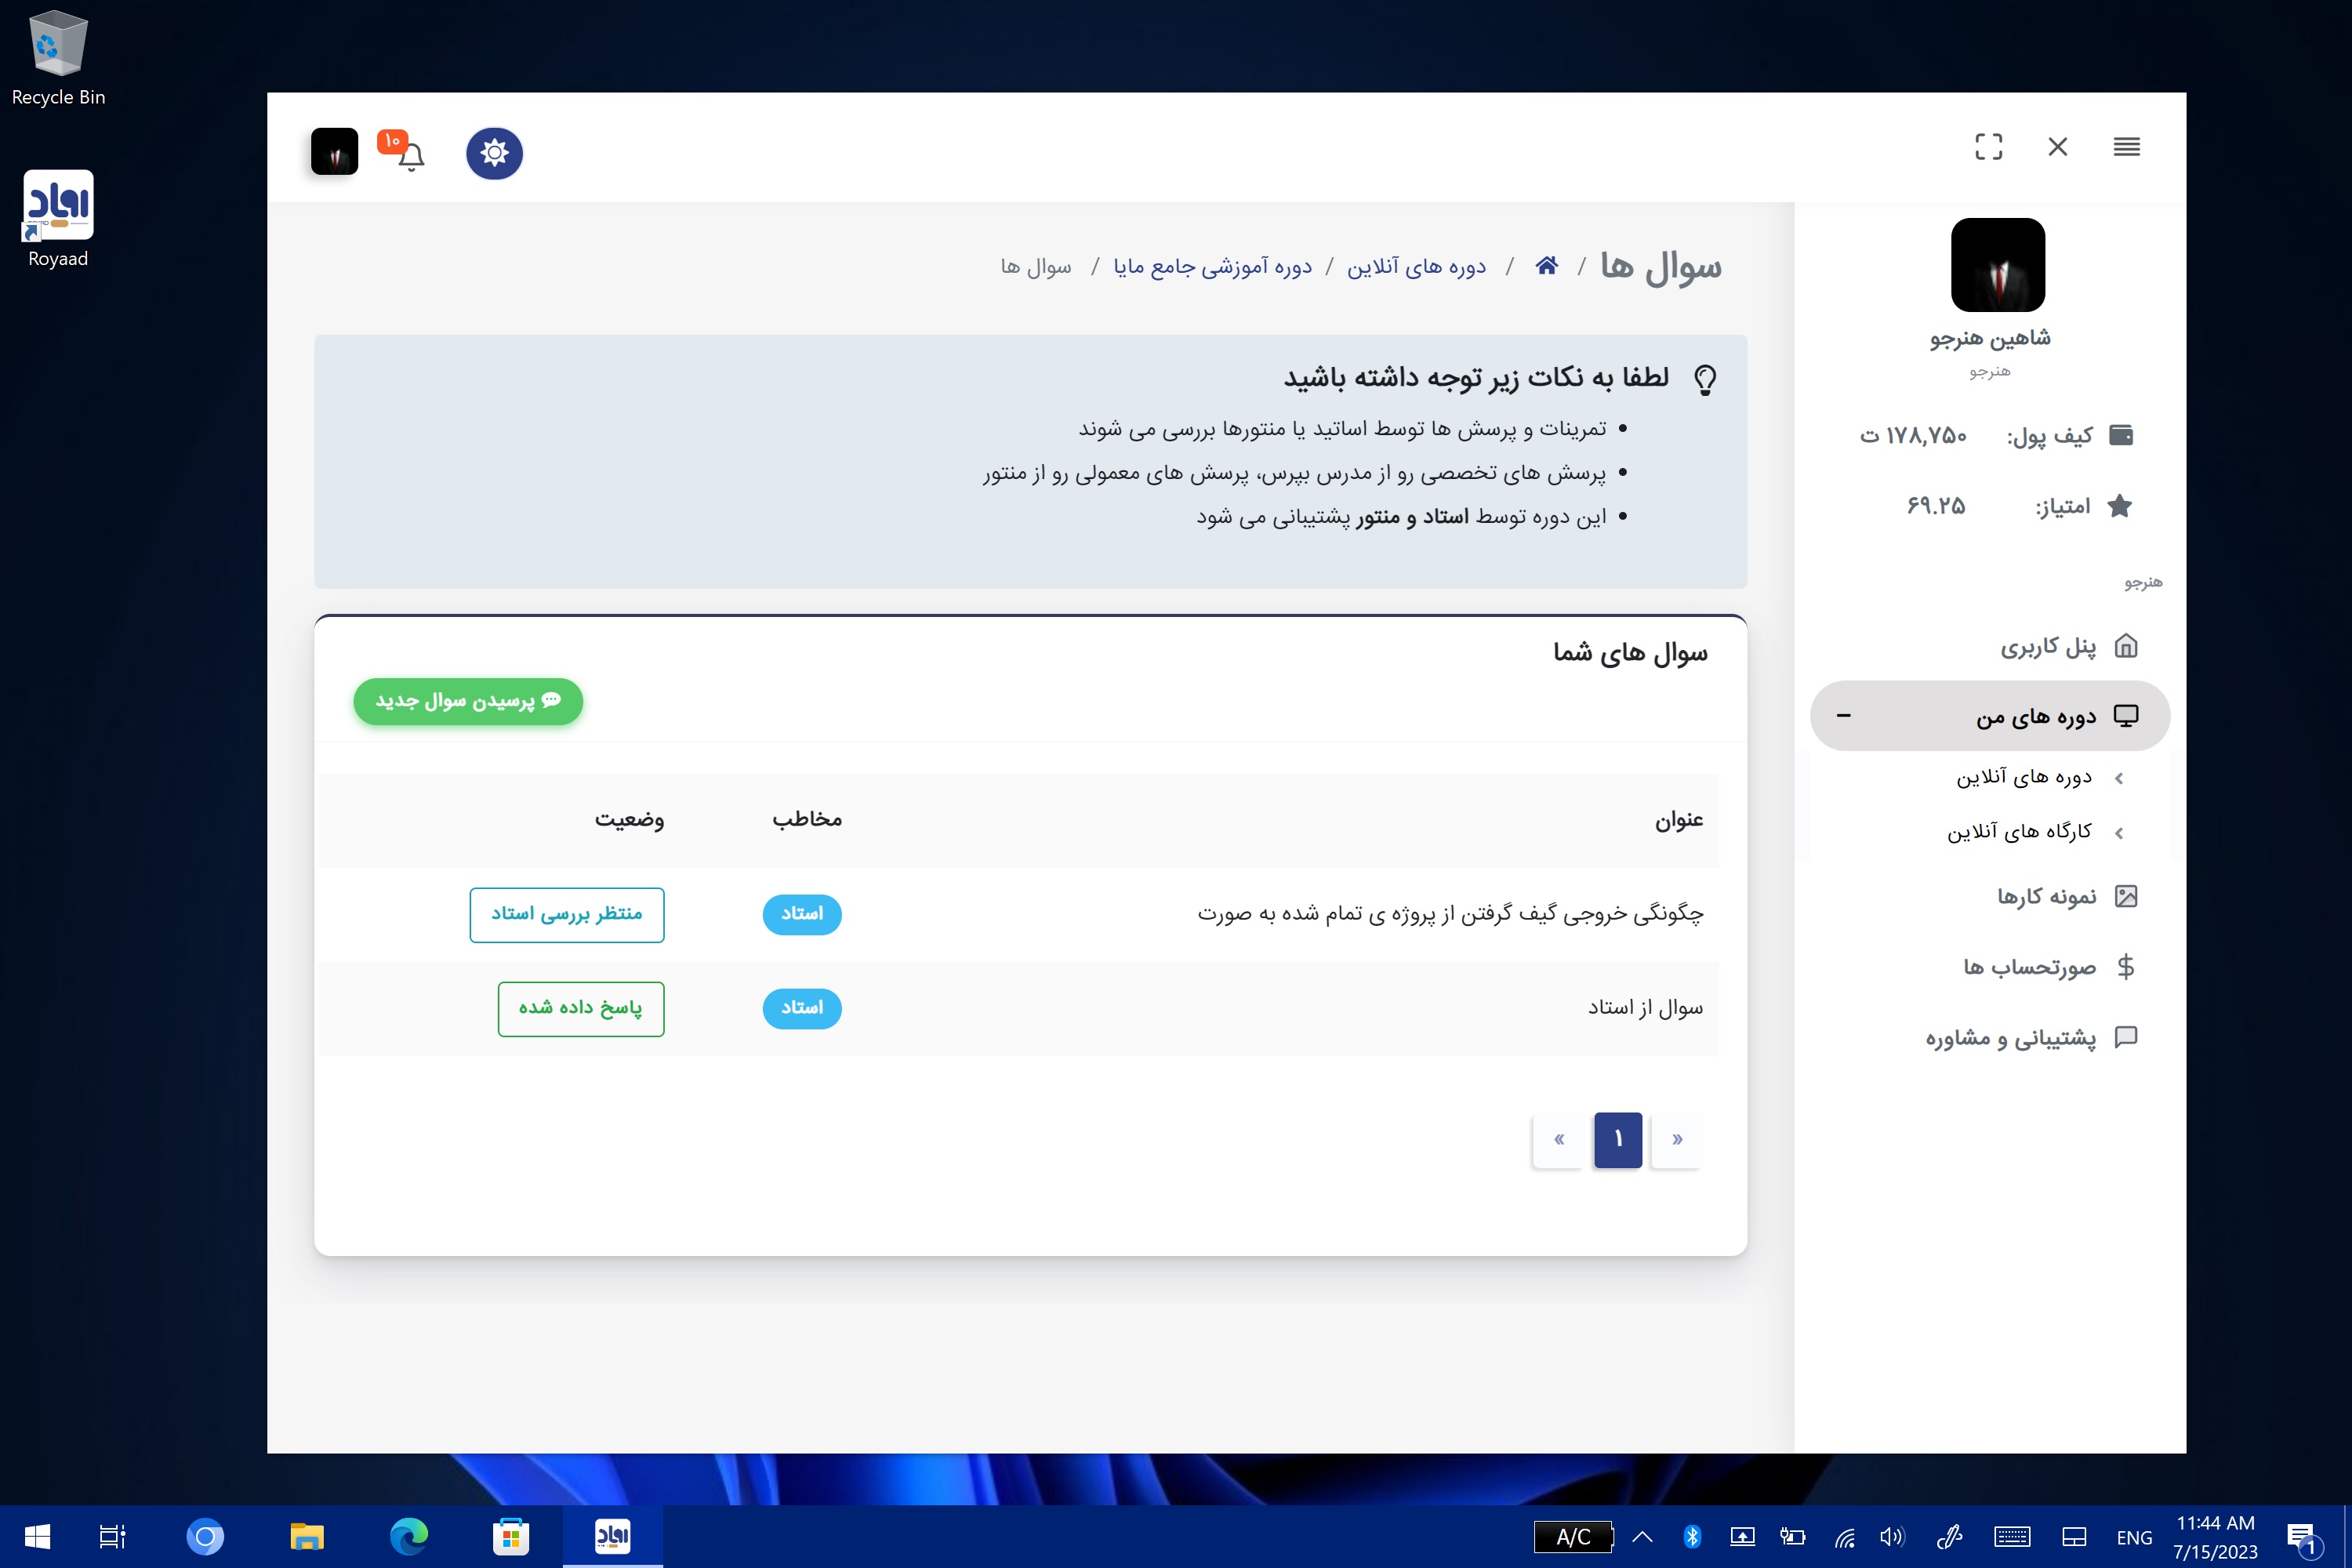 Shahinsoft.ir Royaad desktop application Questions